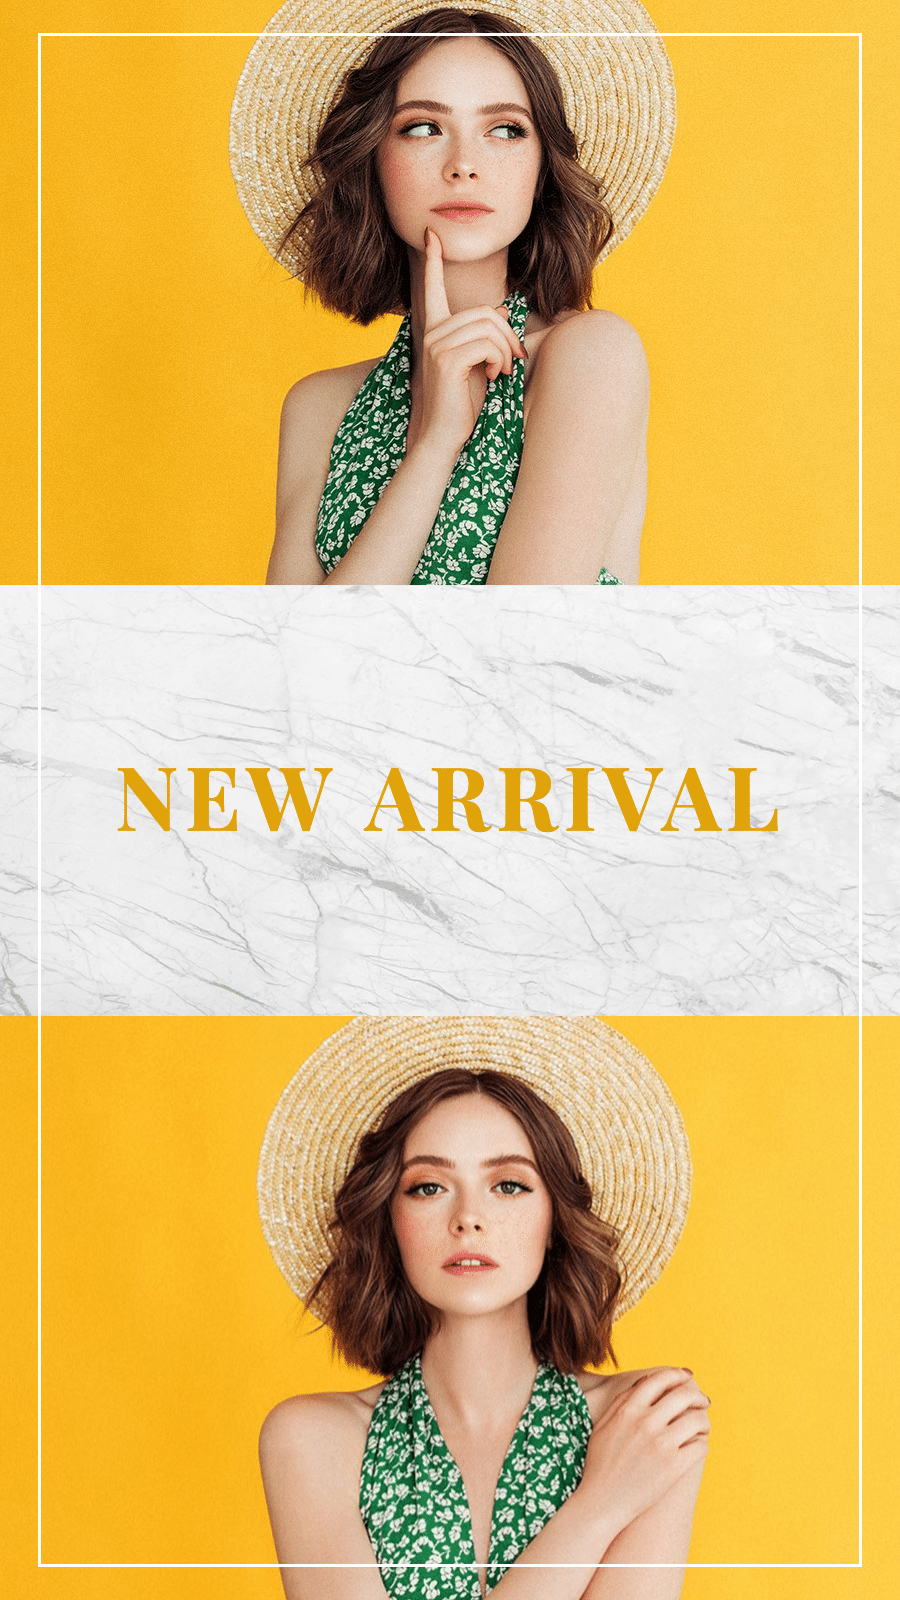 Rectangle Frame Women's Wear New Arrival Display Instagram Story